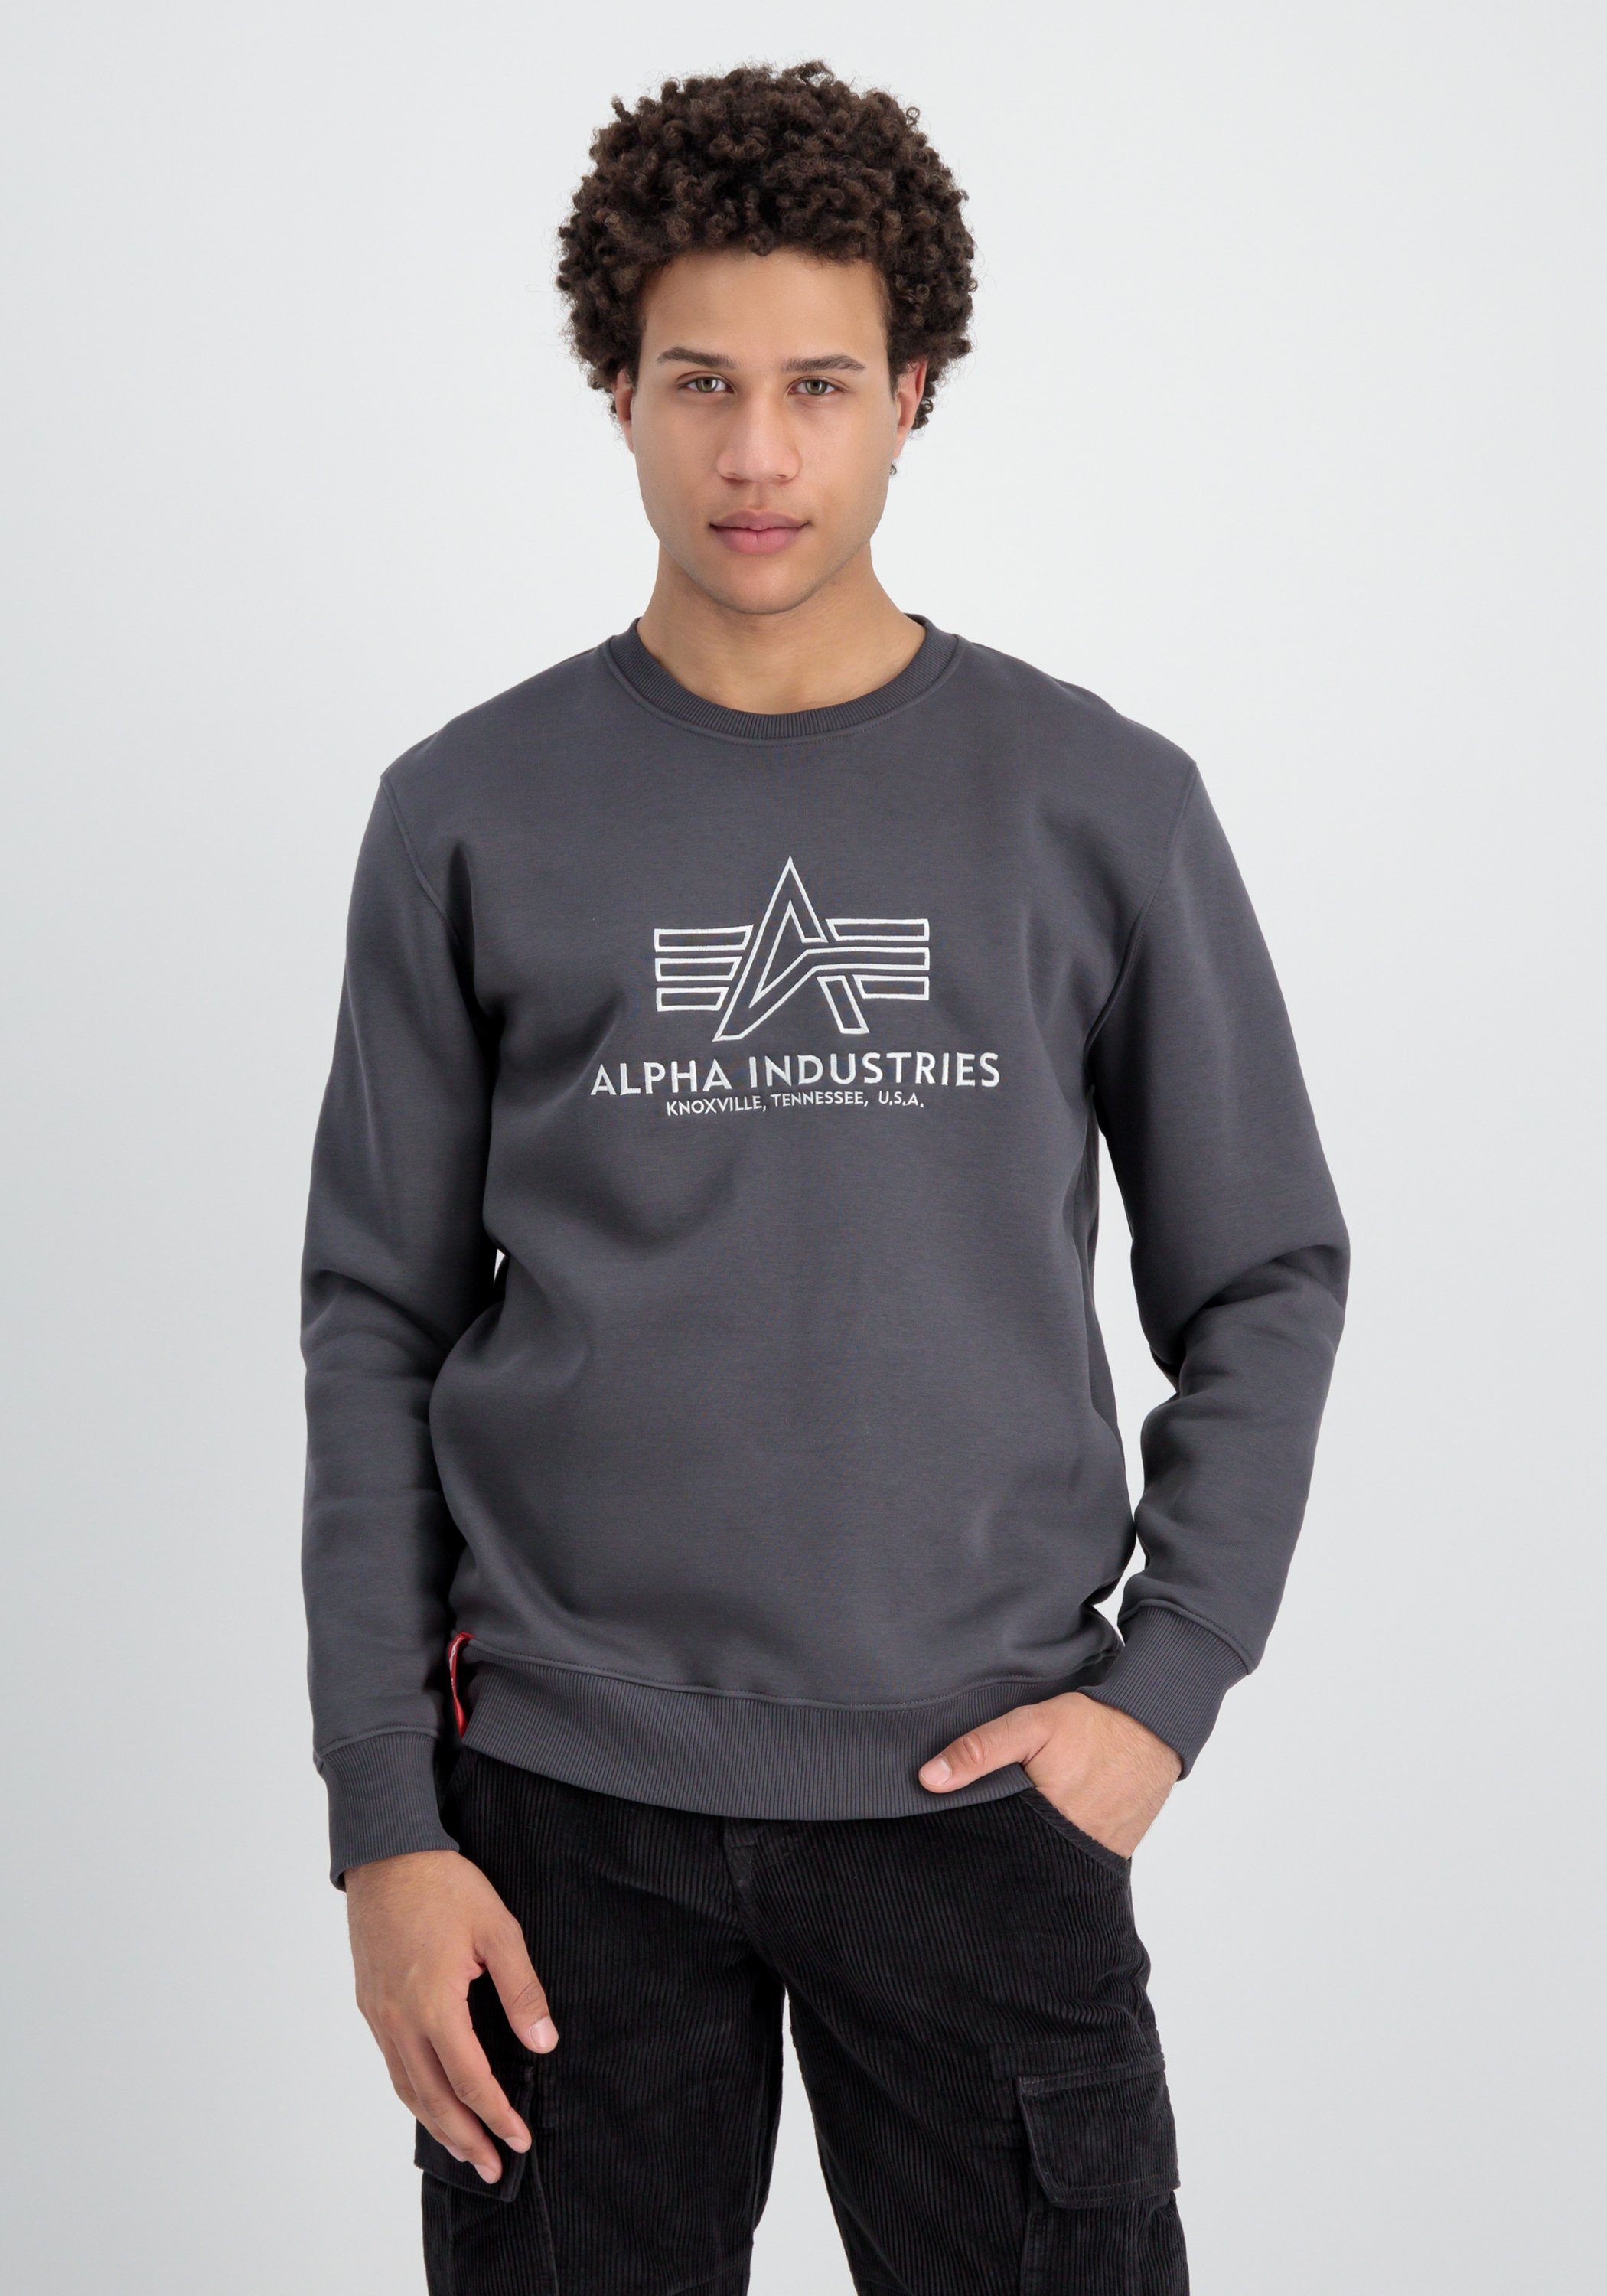 Sweater Basic Alpha Alpha grey Sweatshirts vintage Industries - Embroidery Men Industries Sweater